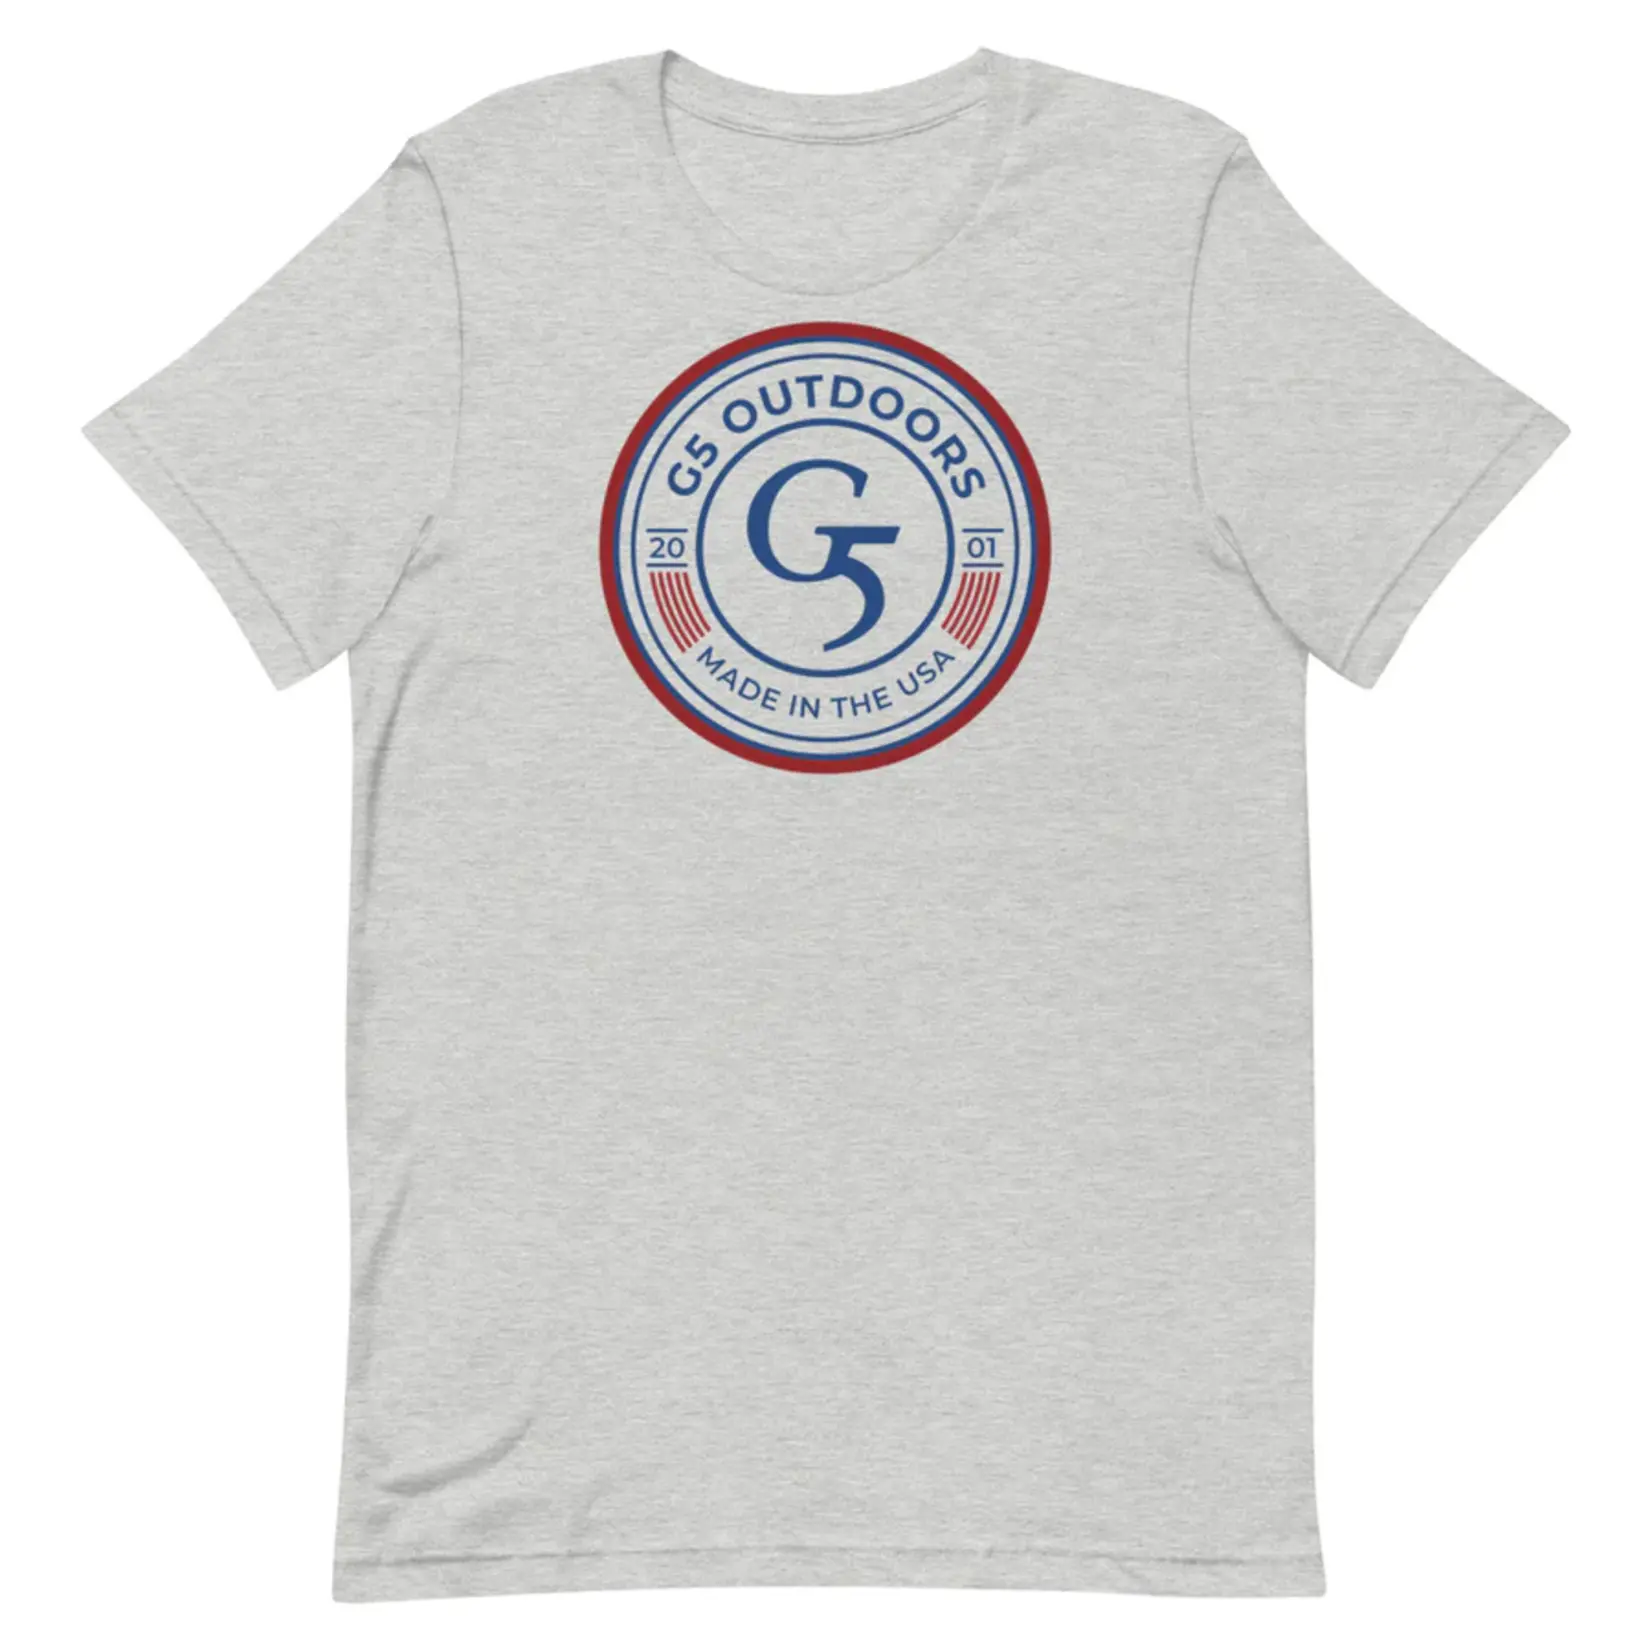 G5 G5 Outdoor Badge T-shirt - Grey  - Medium